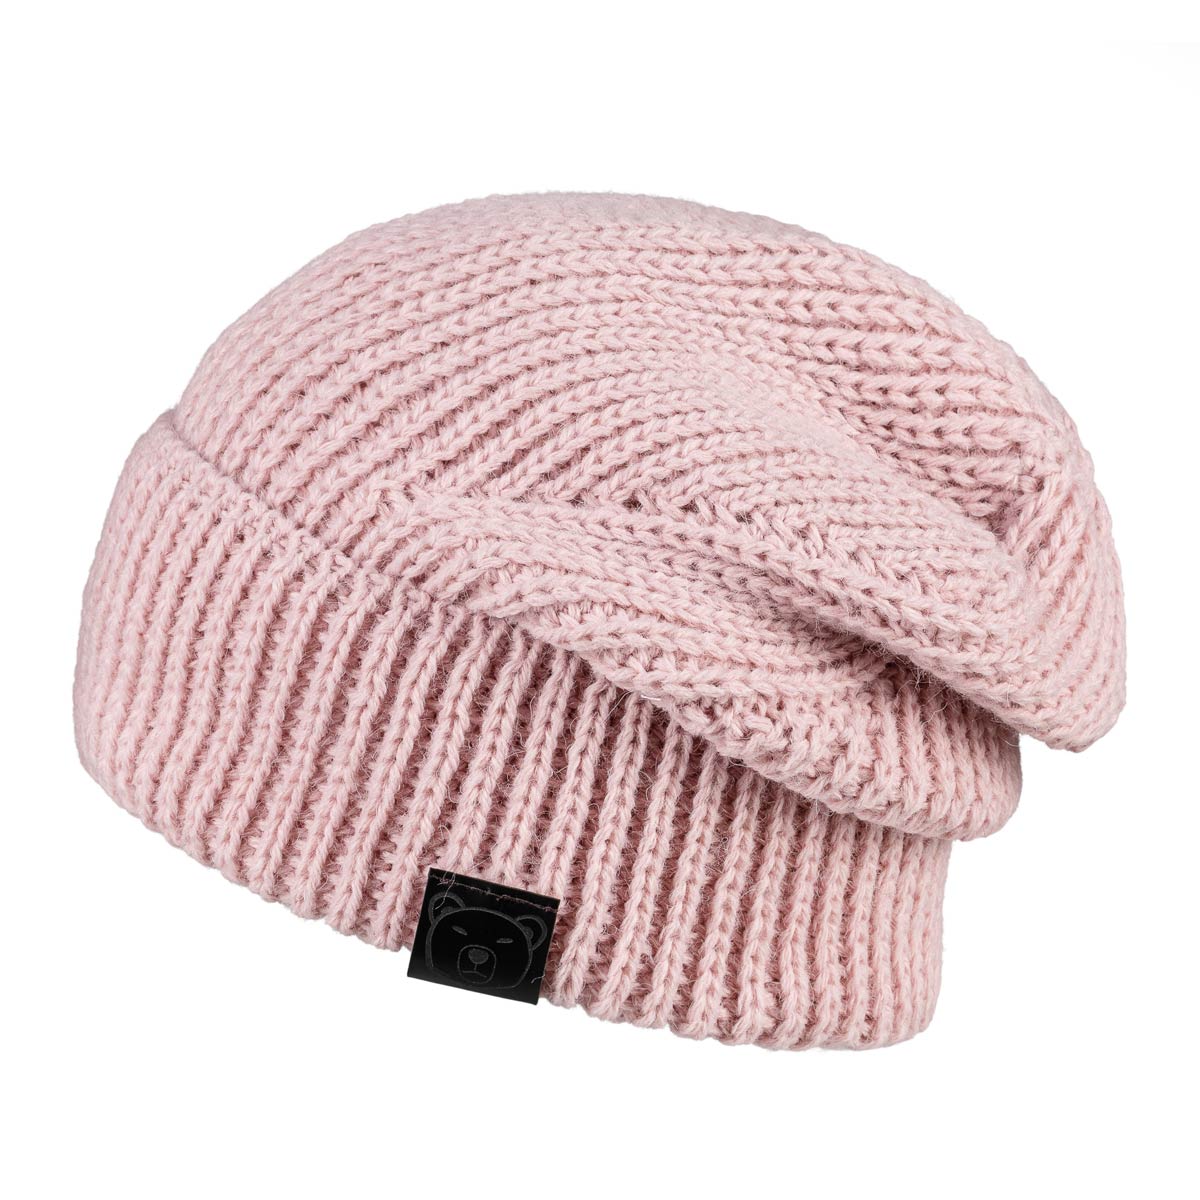 bonnet-femme-rose-souple-et-confortable-made-in-europe--CP-01607